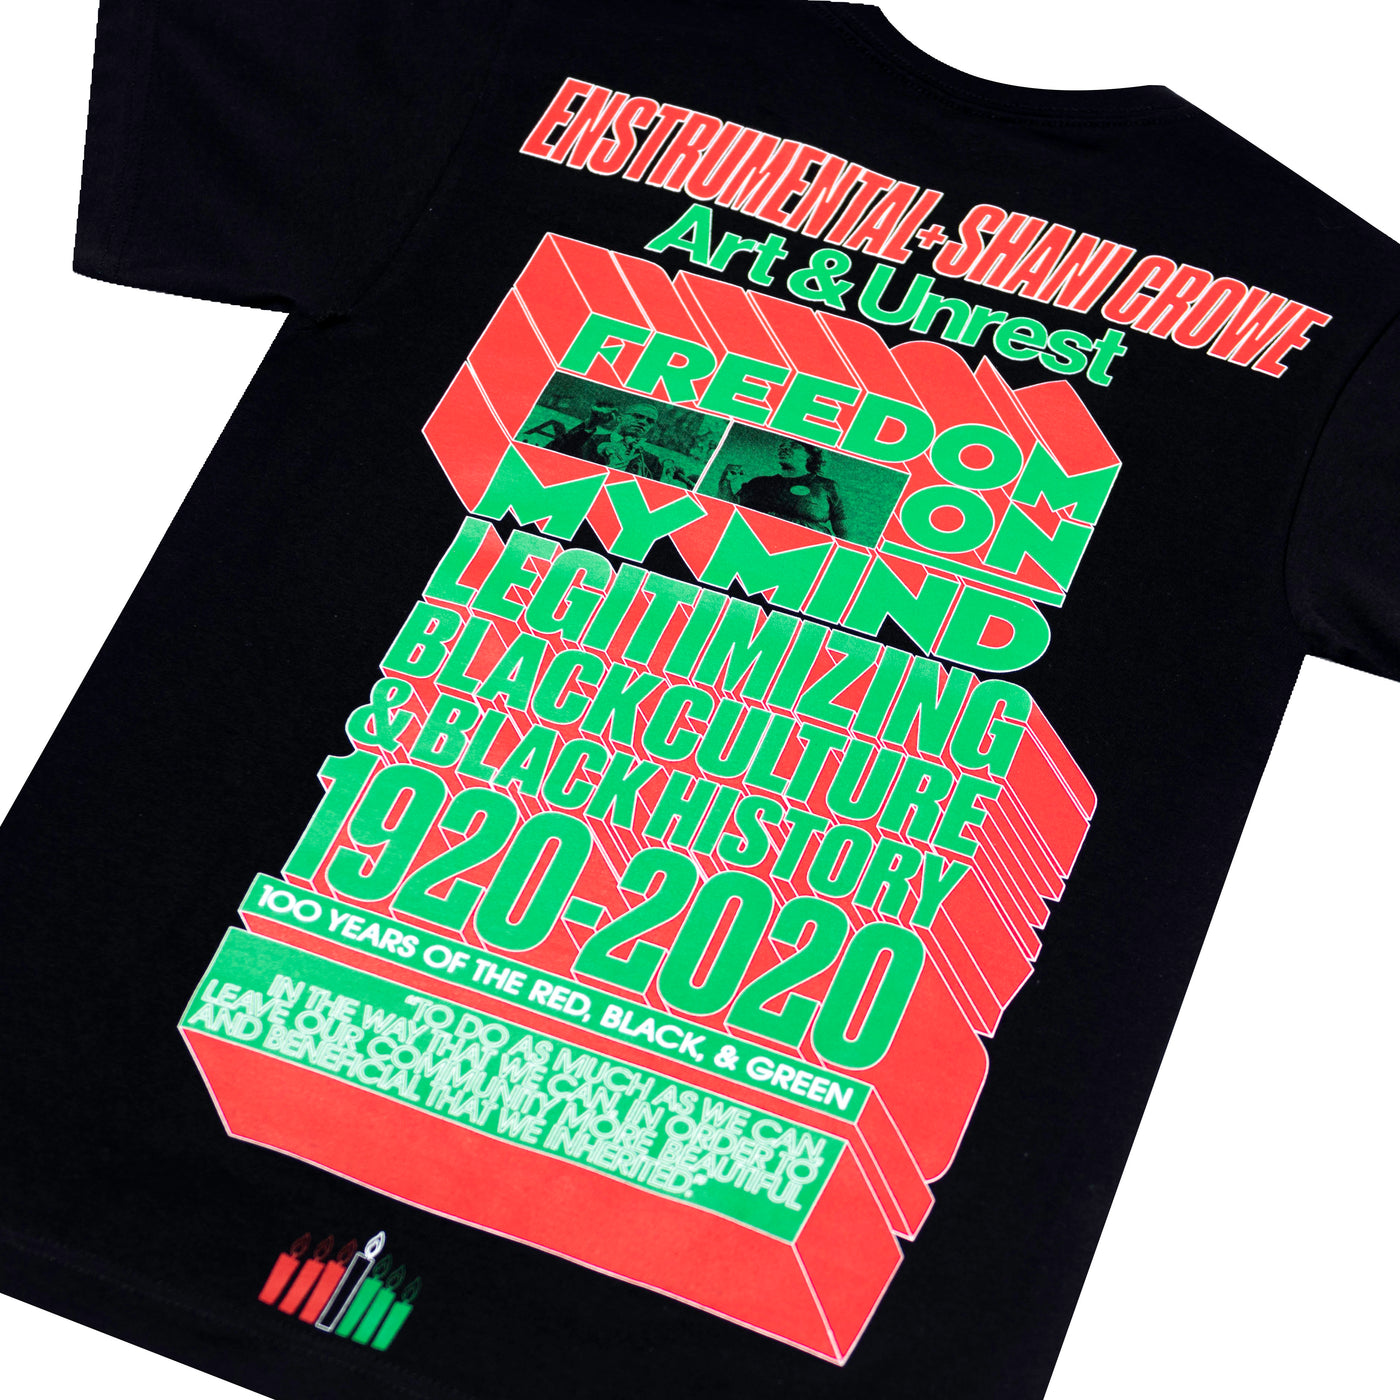 "RBG on 100” - Enstrumental + Shani Crowe - Limited Edition Shirt